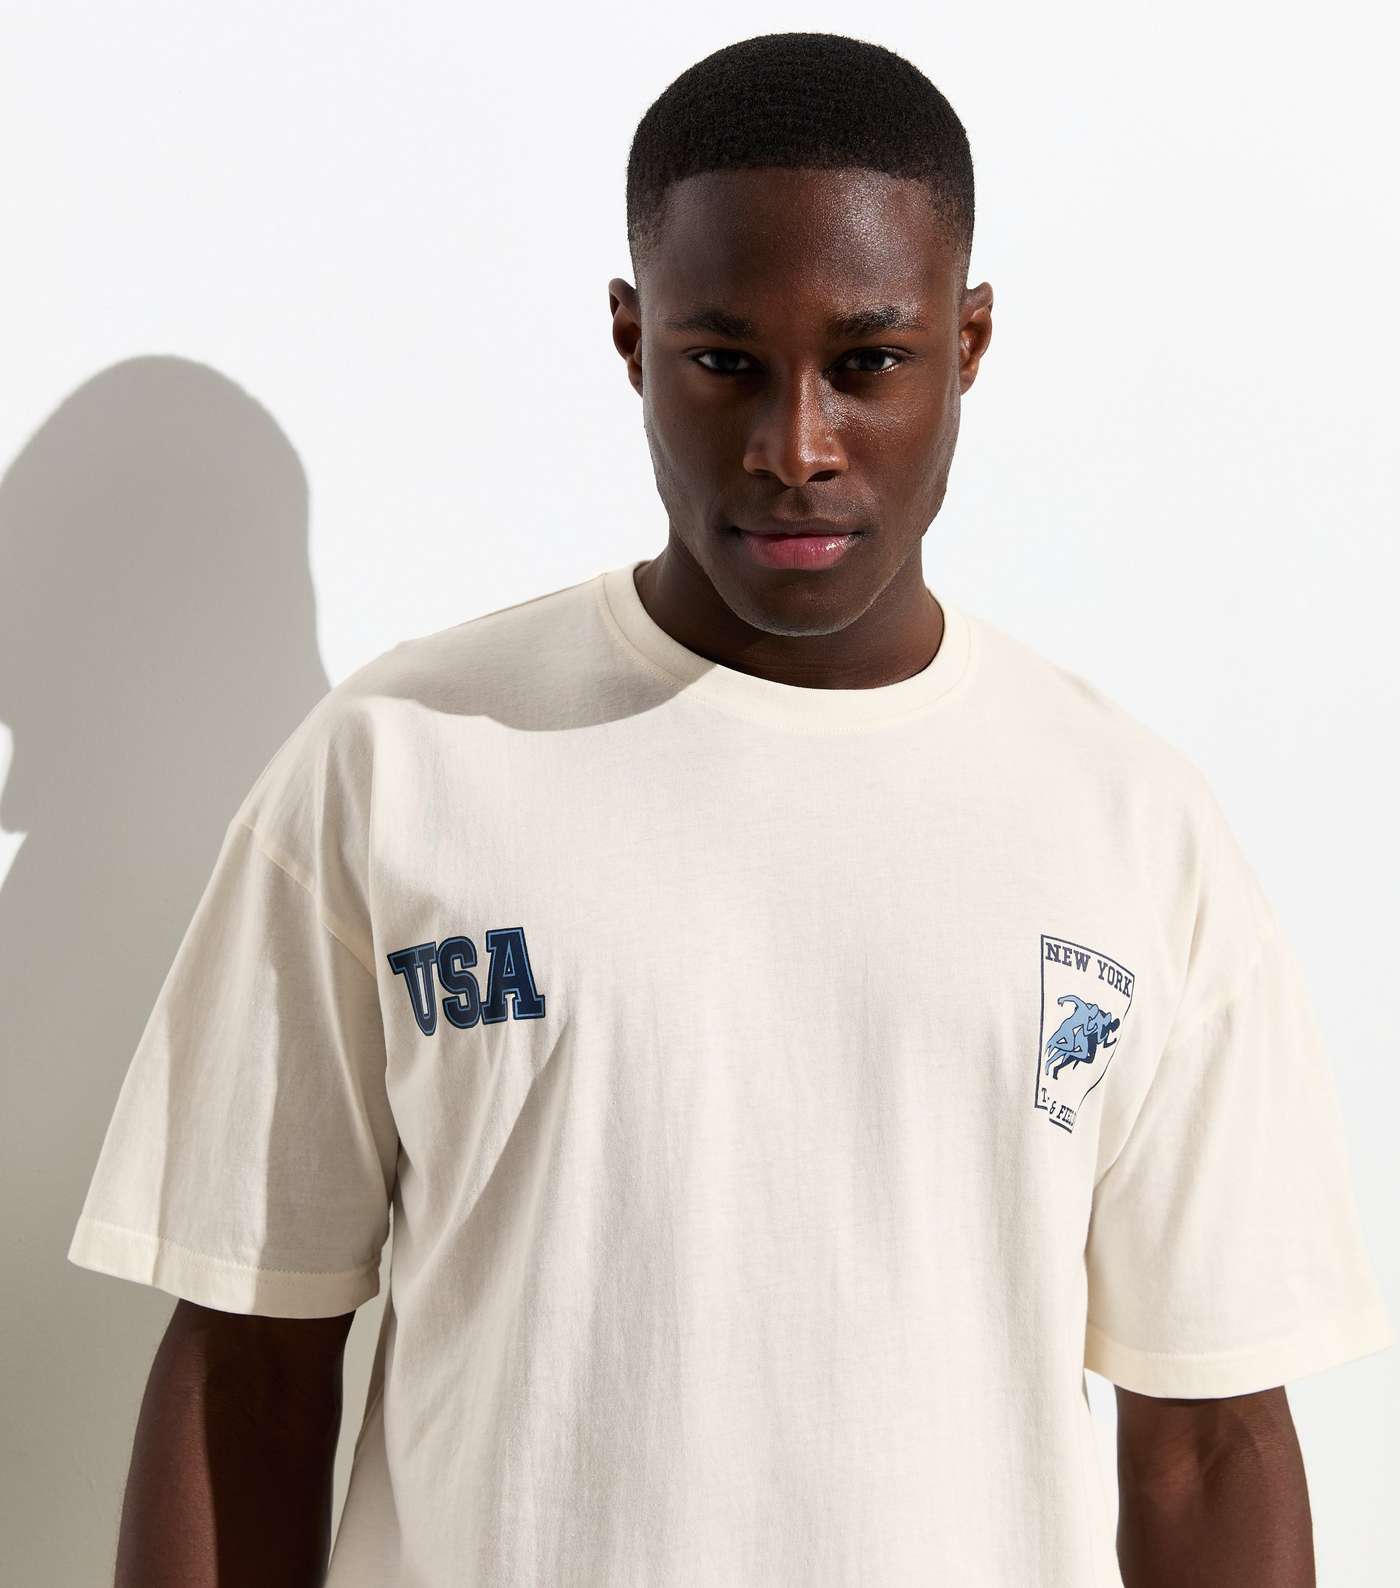 Off White Cotton NY Athletics Print T-Shirt Image 2